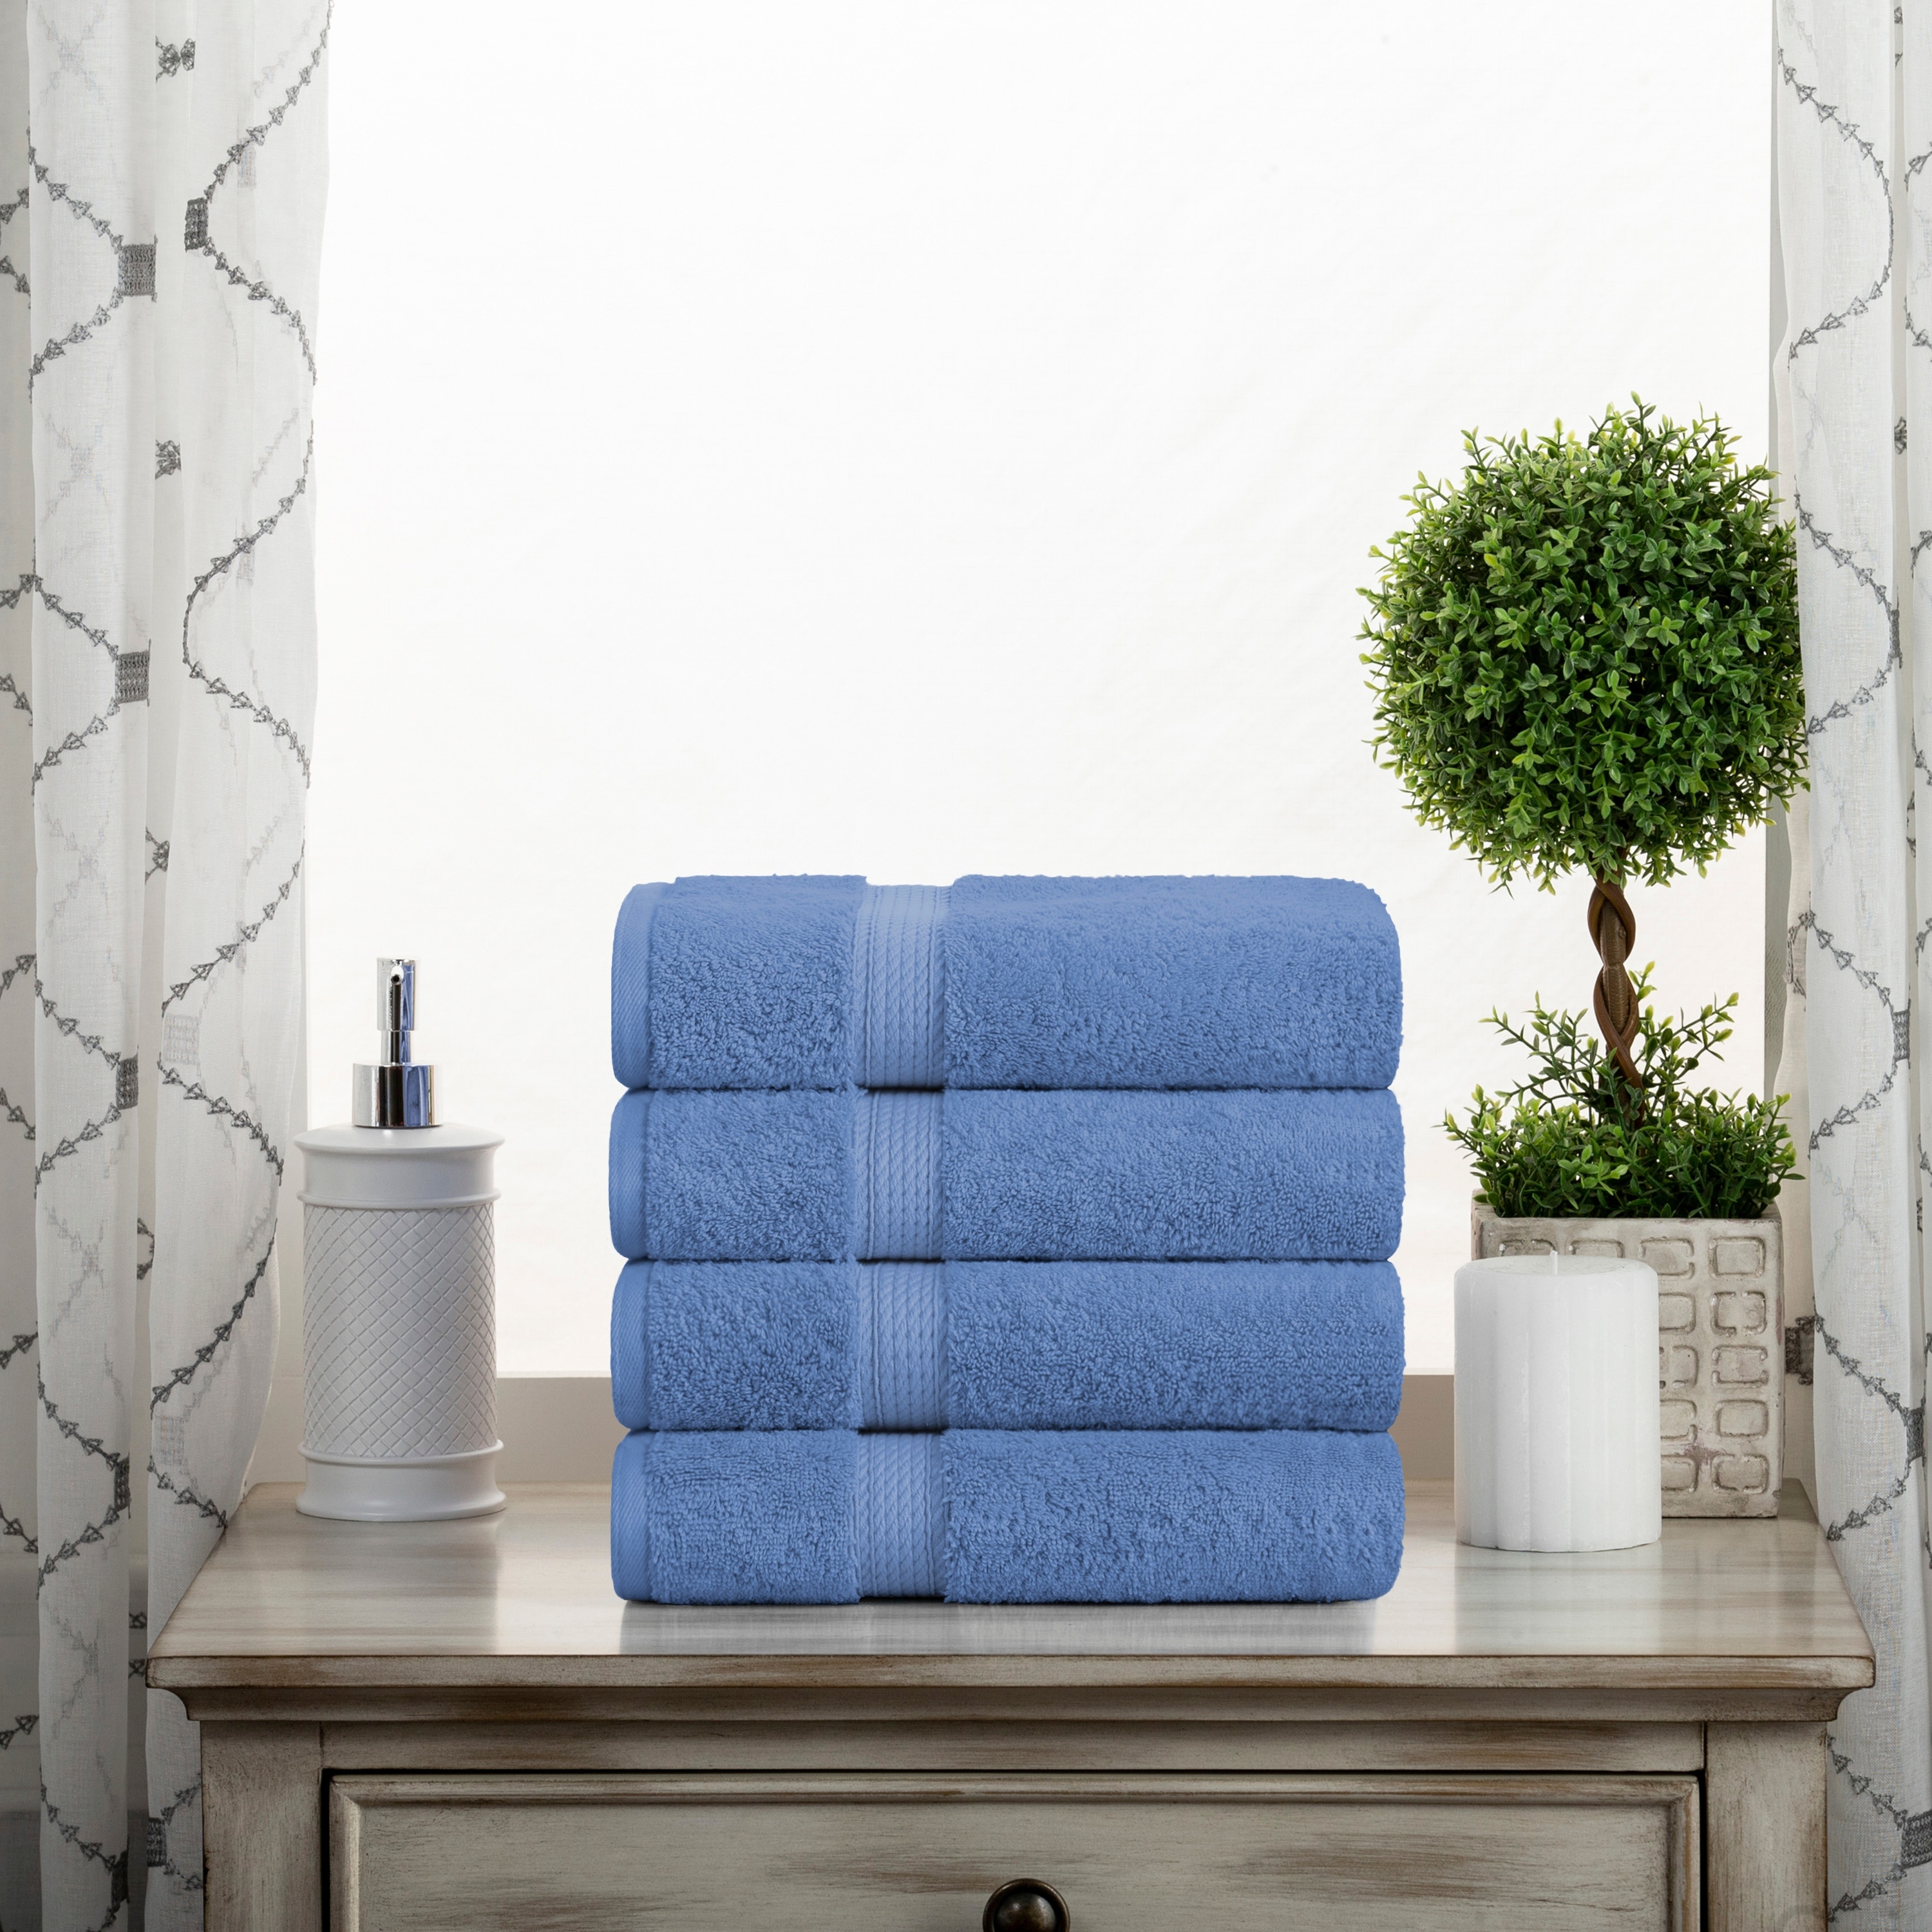 GuoChe Light Blue Decorative Bathroom Hand Towels Cotton Bath Spa Towel  Sets Set of 2 Hand Face Towel 16 X 30 Face Washcloth Pretty Hand Towels  for